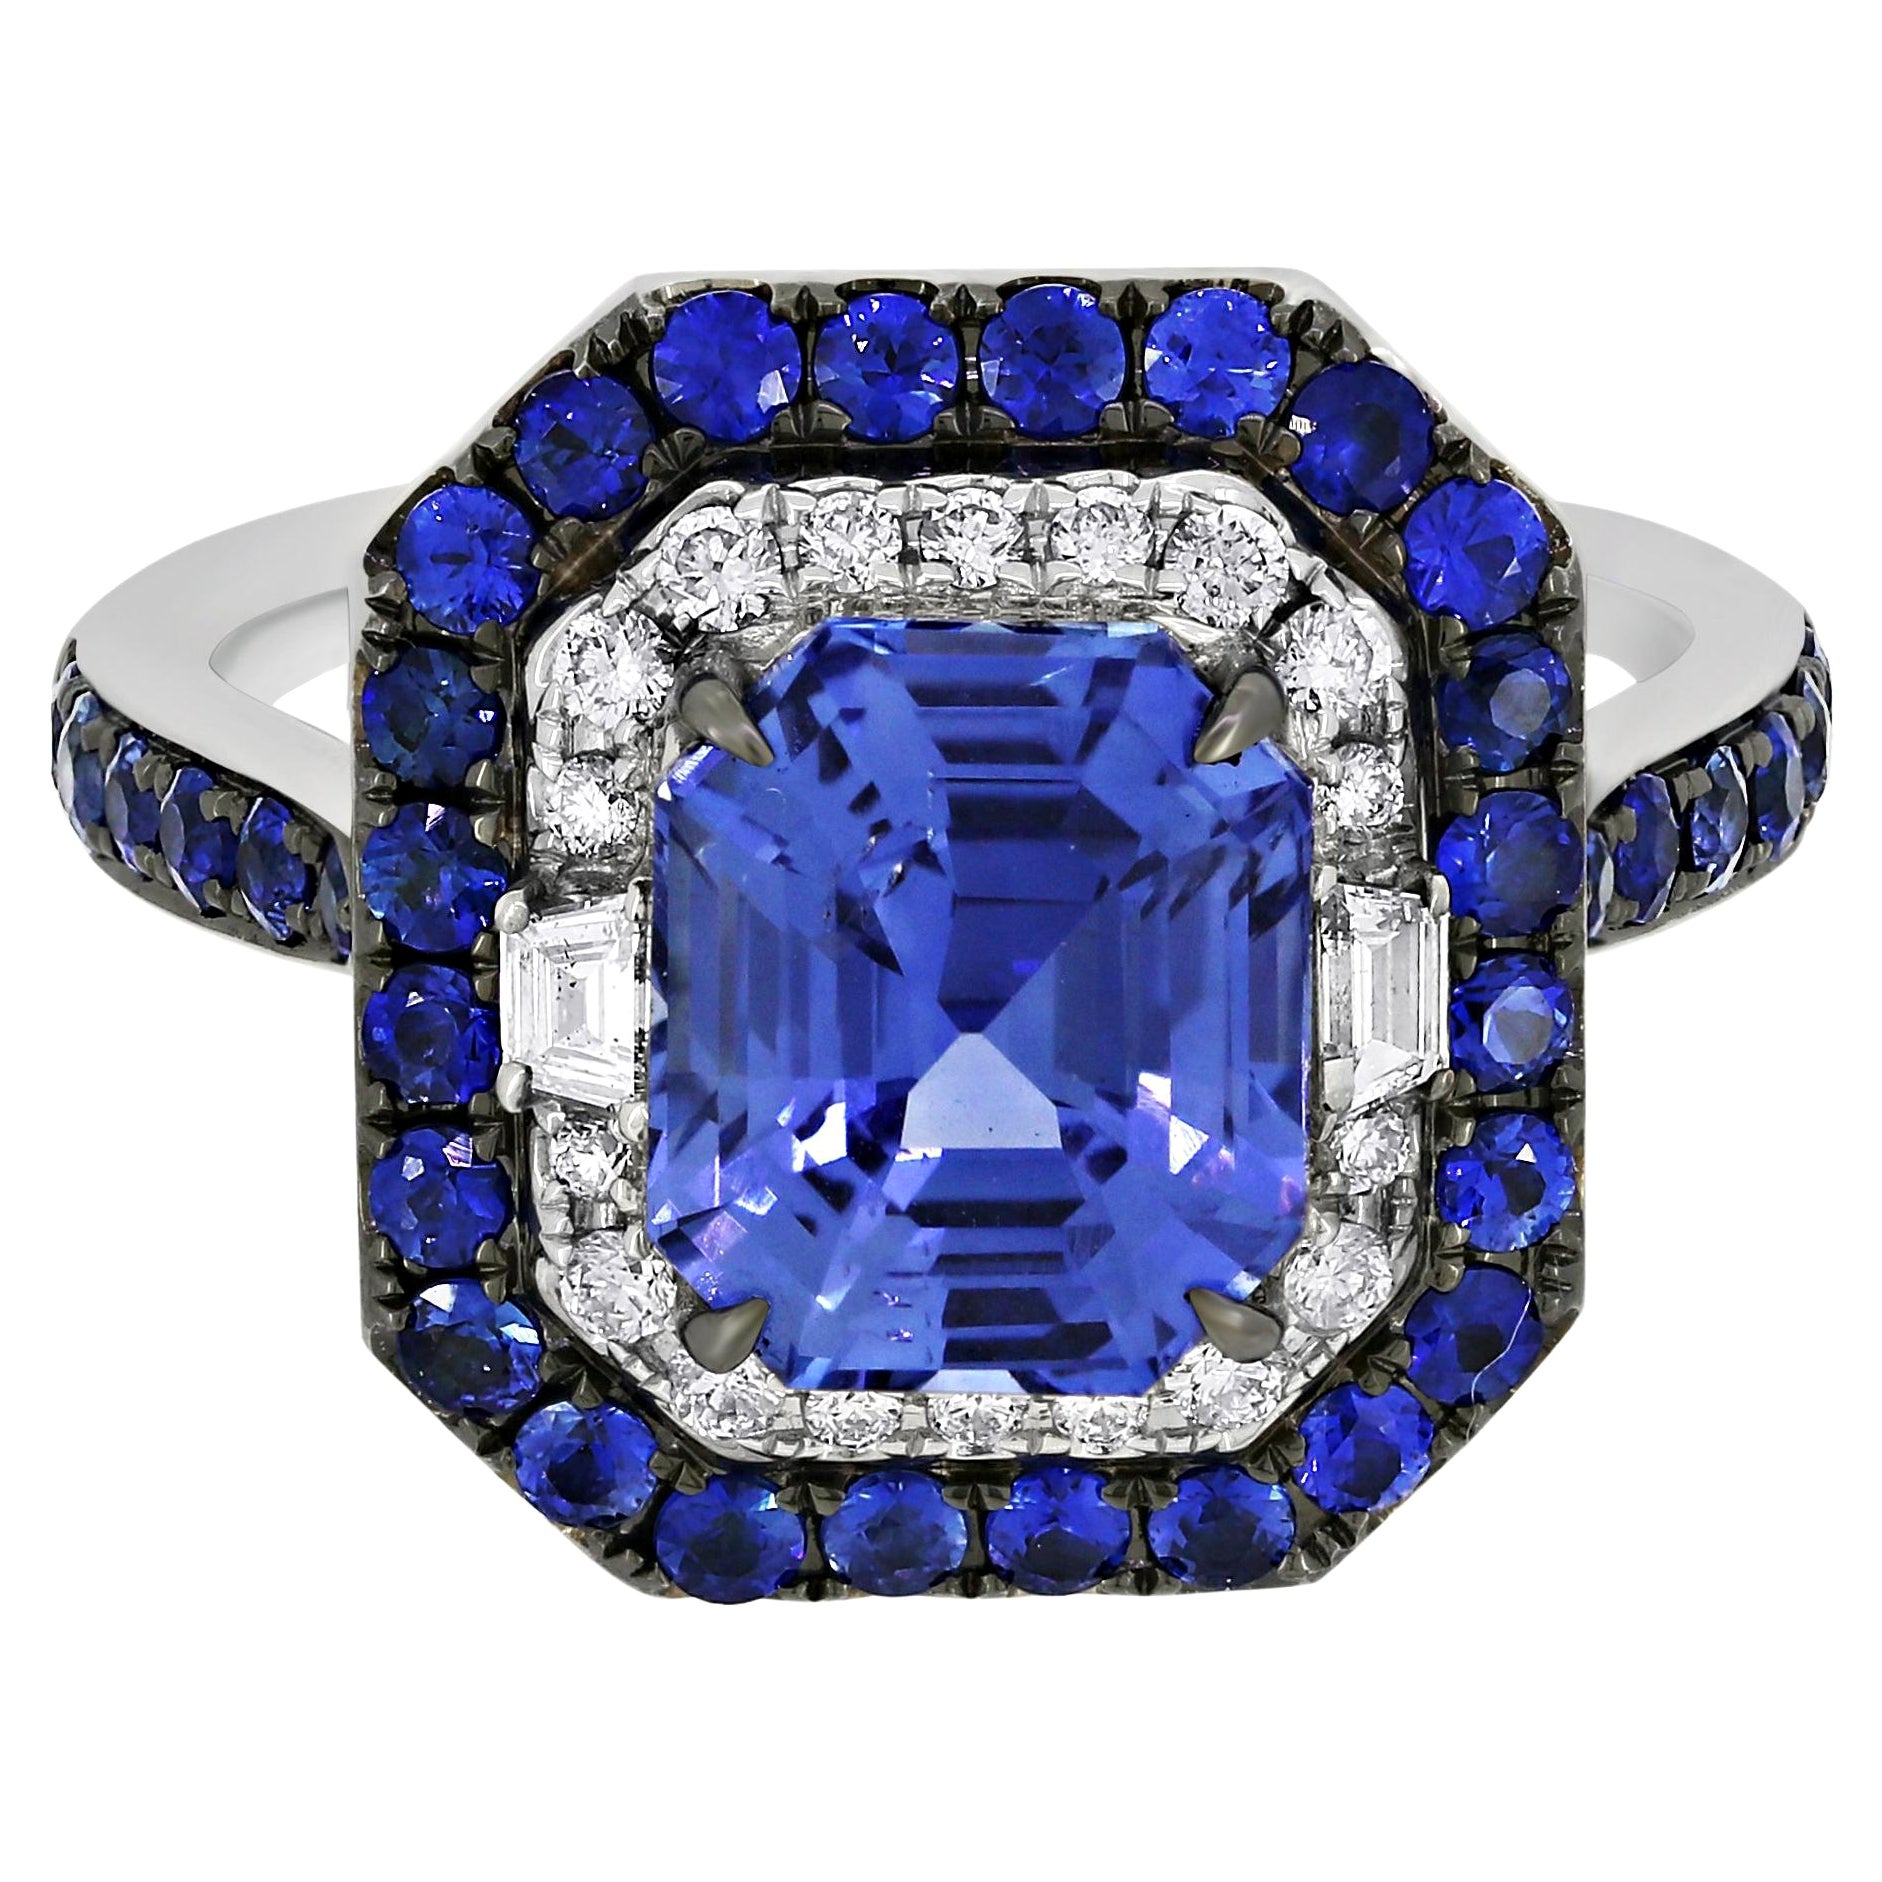 Nigaam 4.49 Cttw. Diamond and Blue Sapphire Swirl Ring in 18K White ...